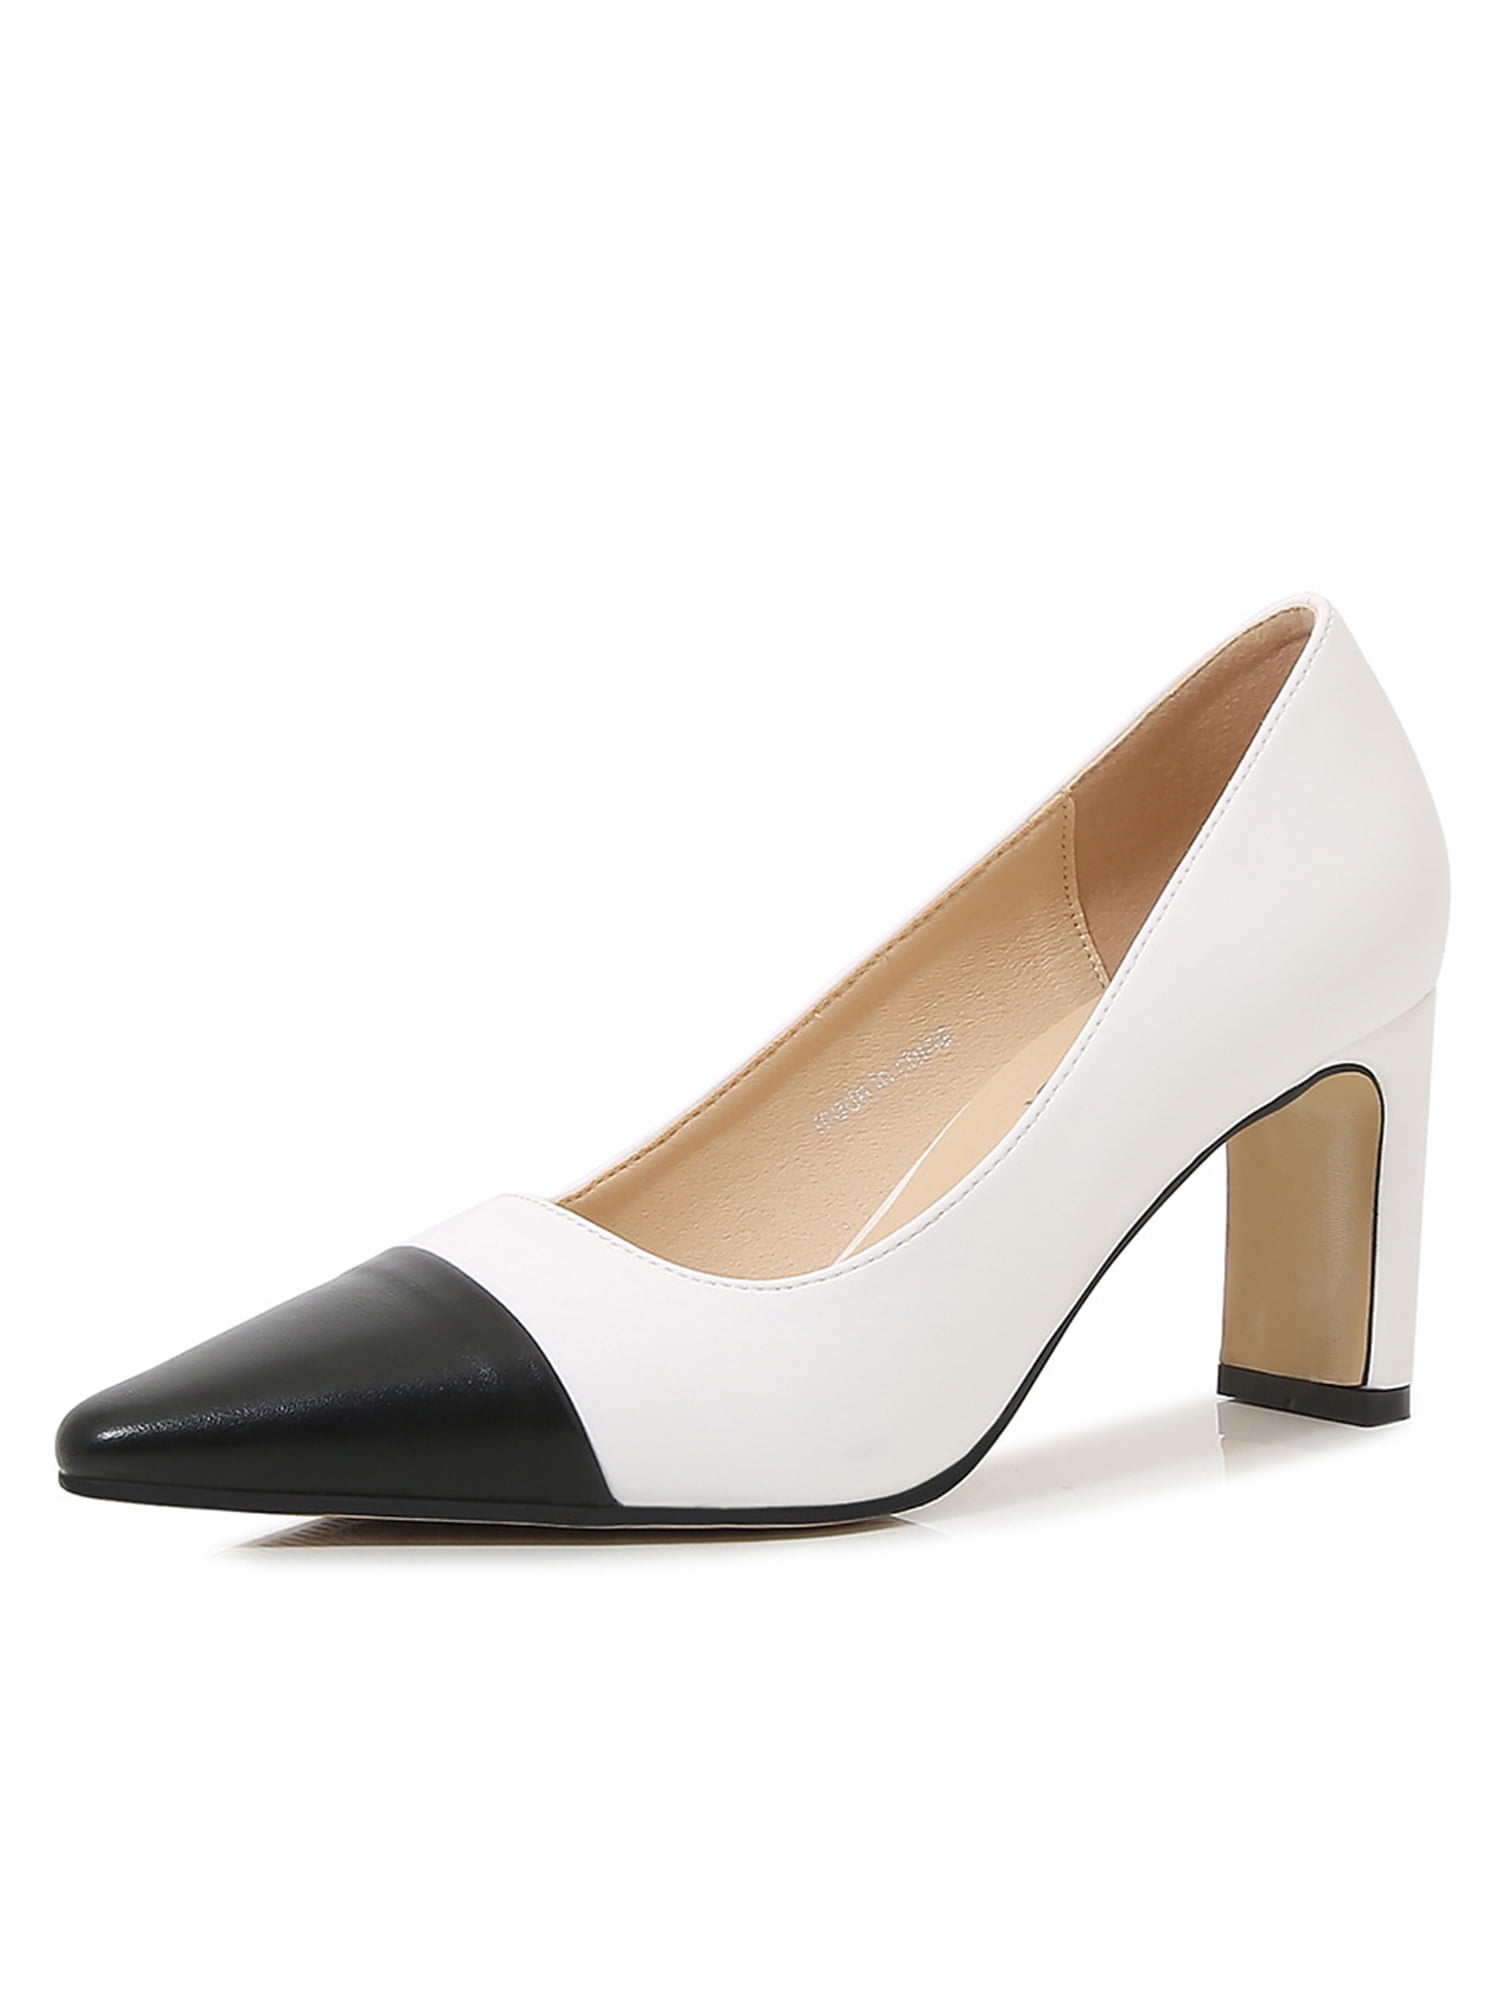 Women's Low-Heel Non-Slip Pointed-Toe Patent Leather Comfortable Work High  Heels | eBay